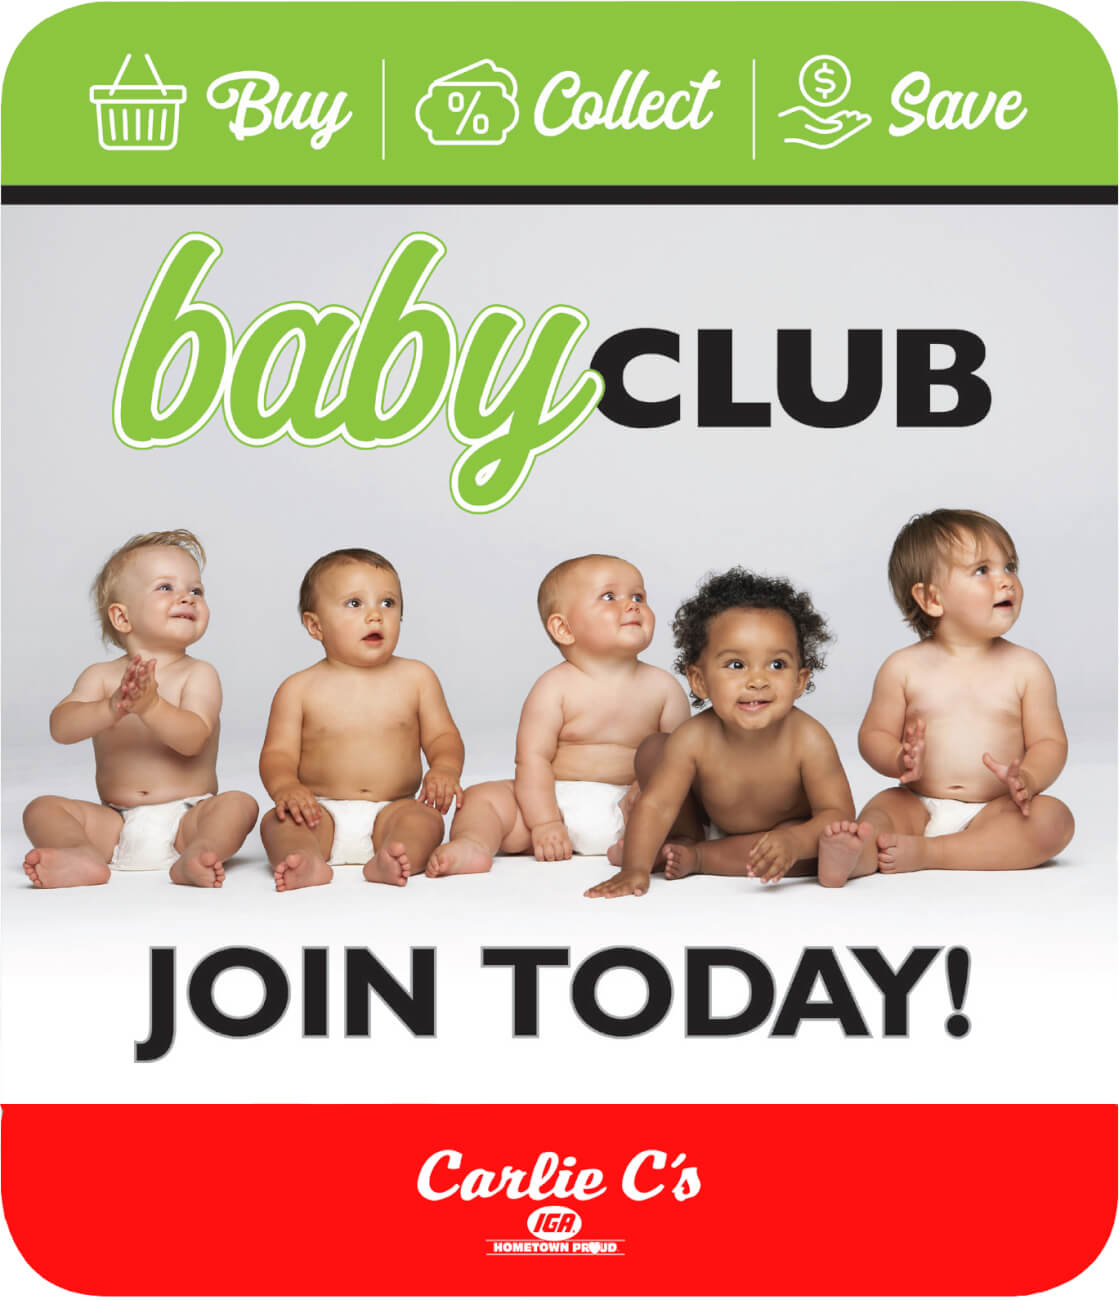 baby club